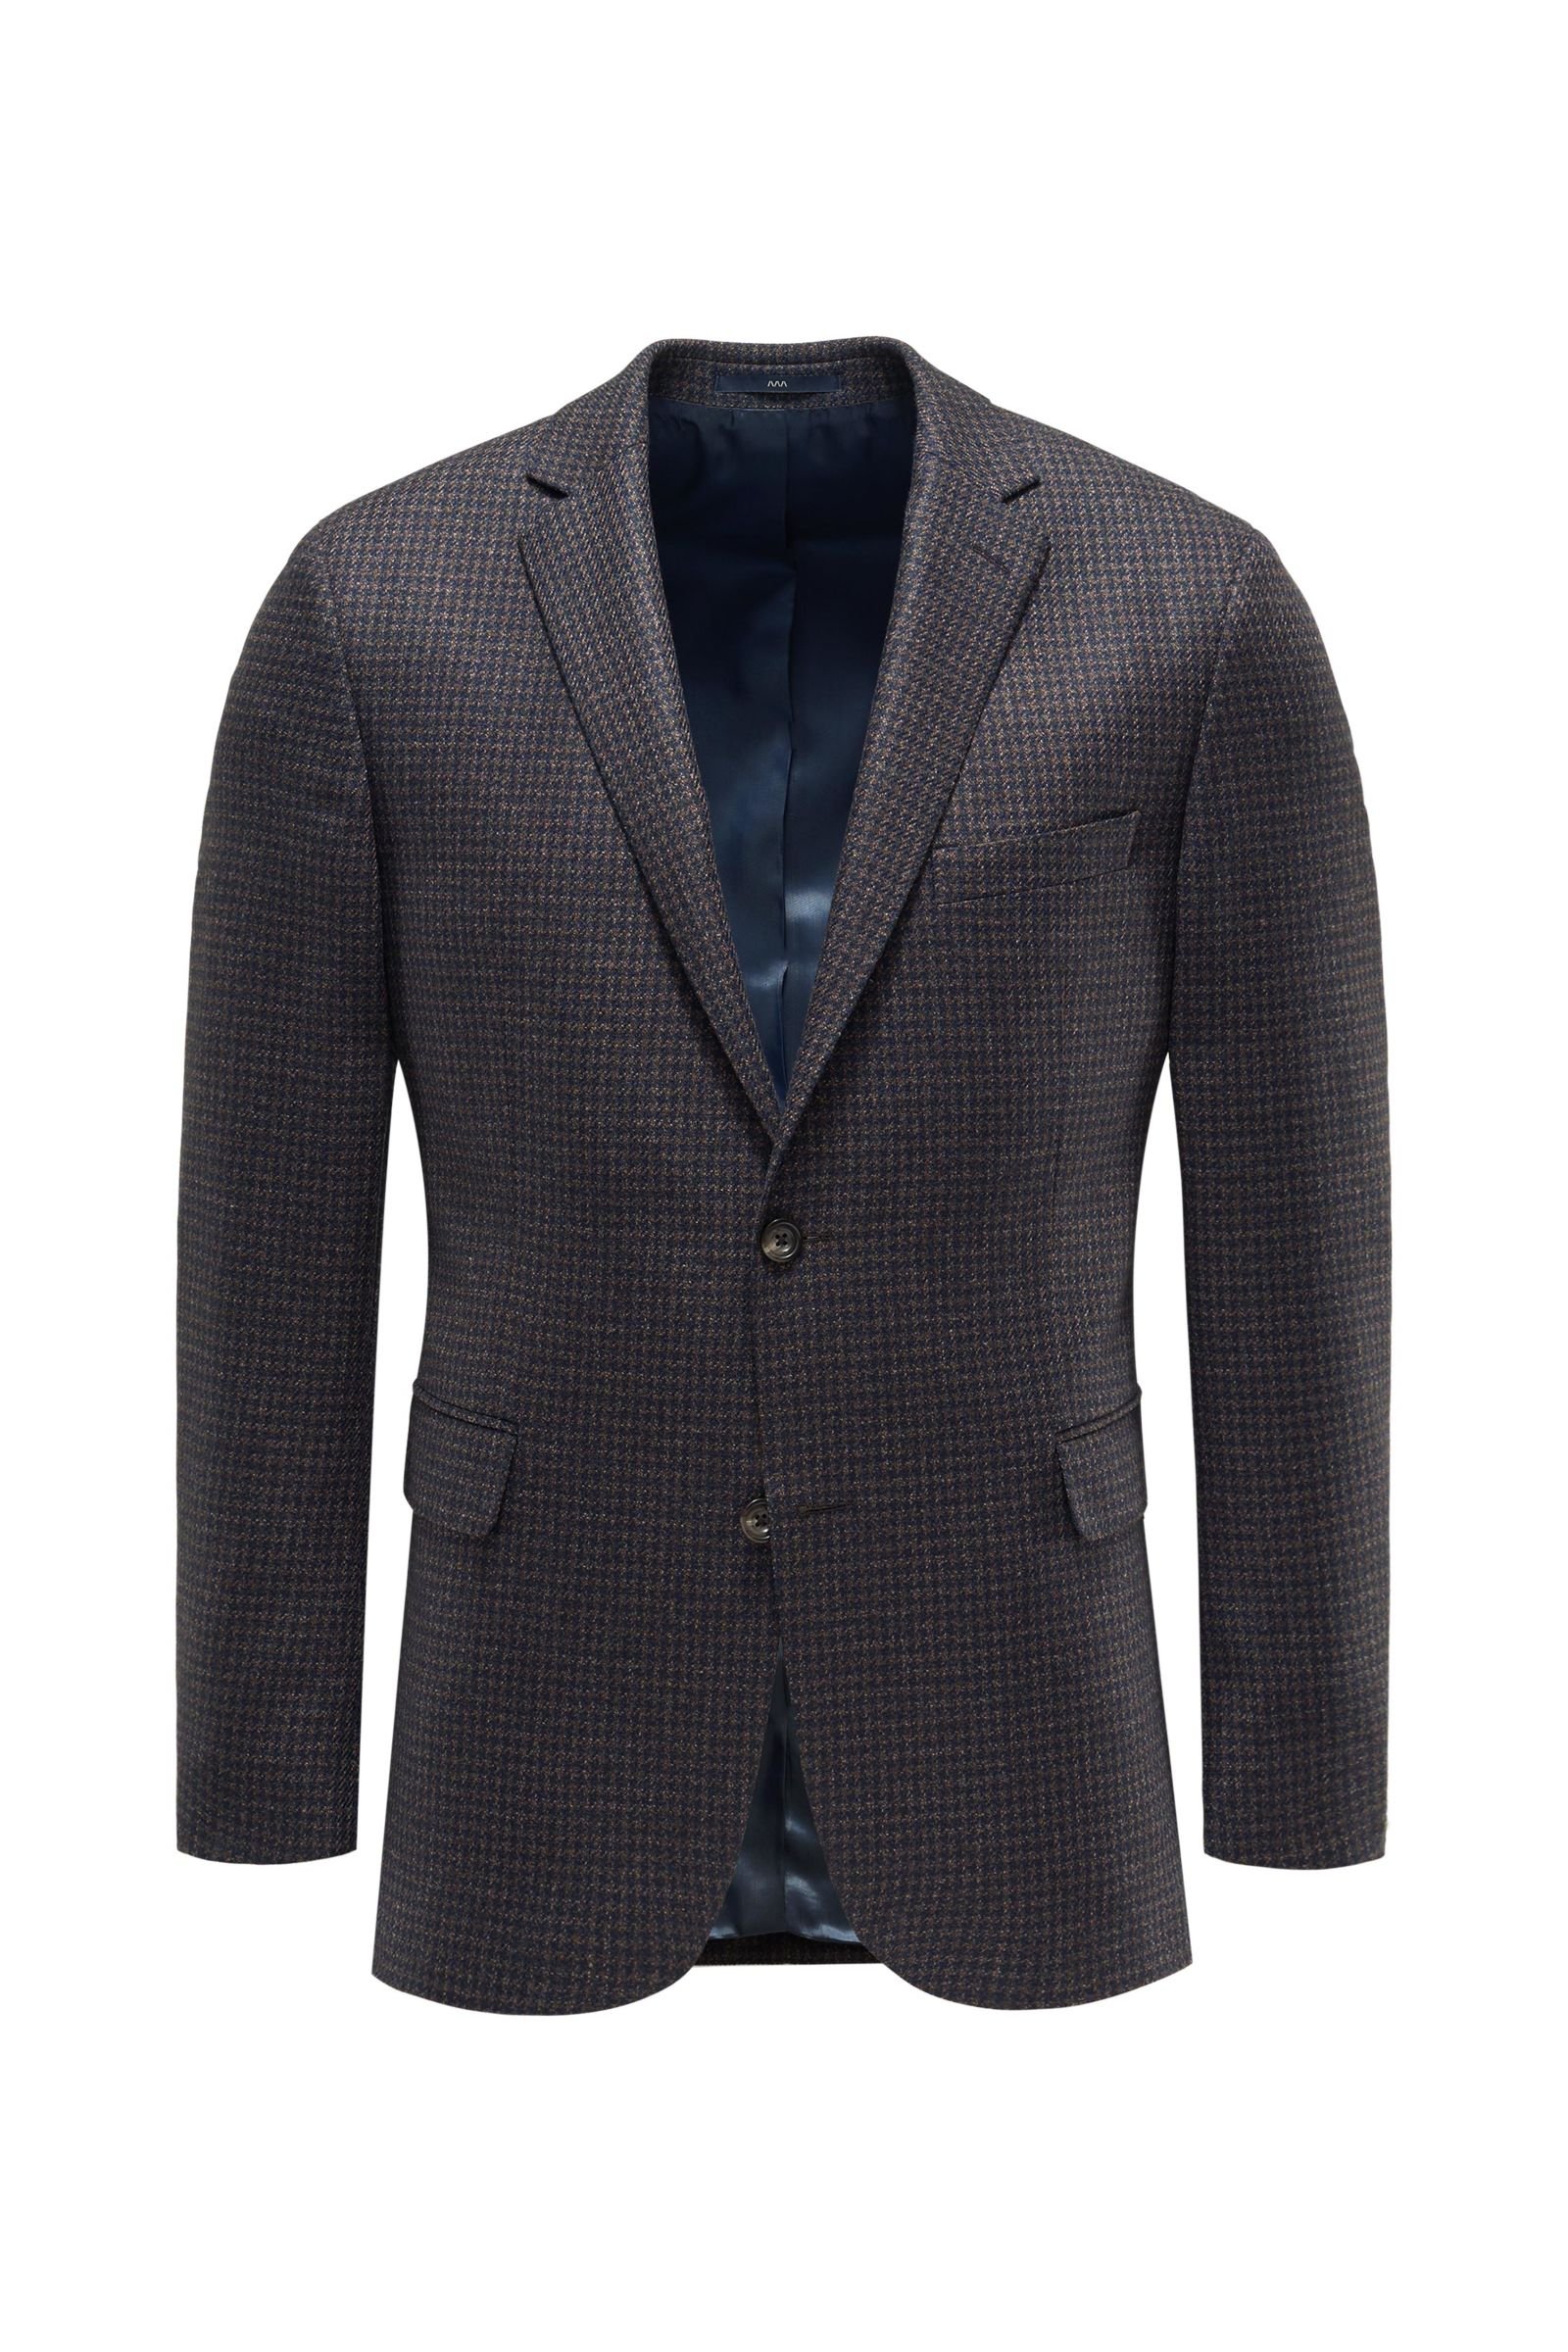 Smart-casual jacket 'Sean' navy/brown checked